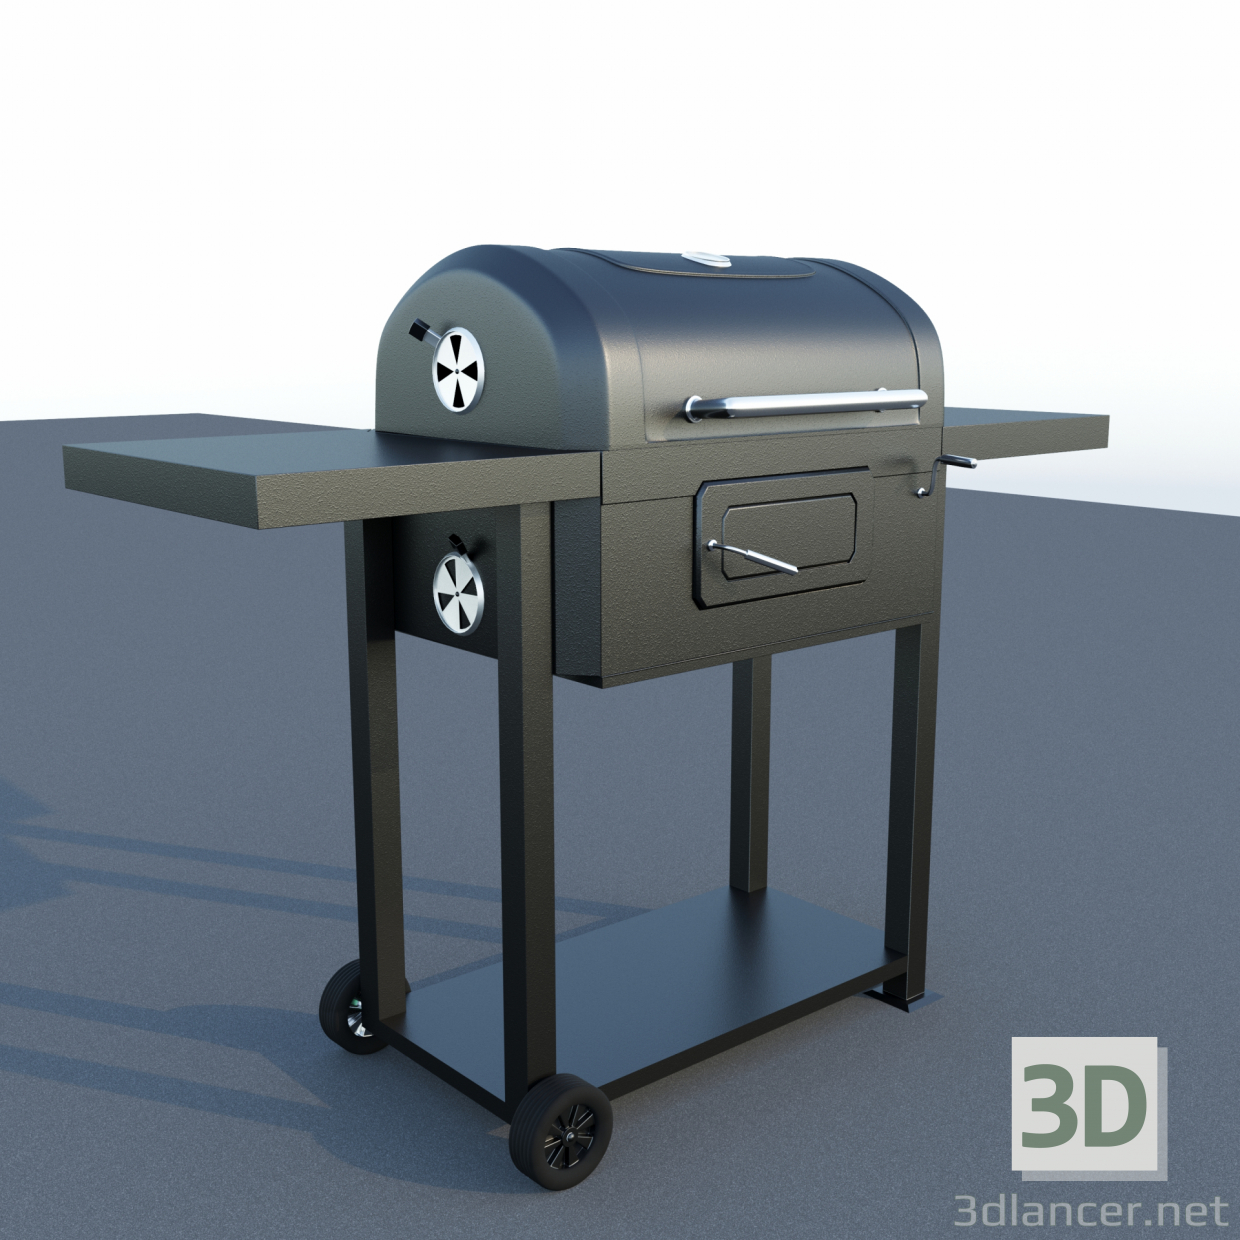 Barbecue 3D-Modell kaufen - Rendern